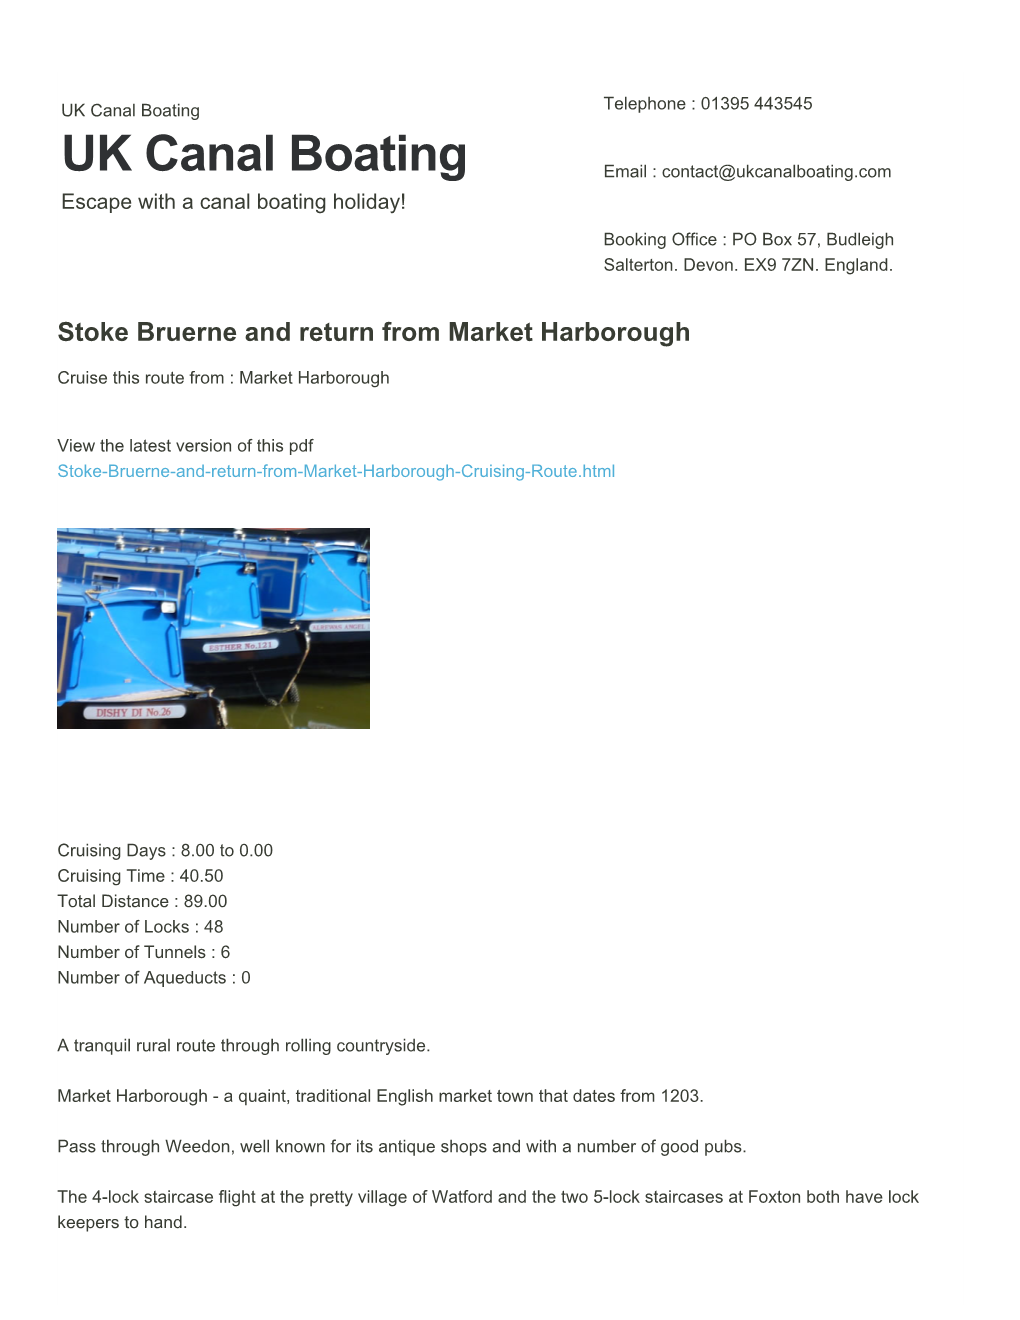 Stoke Bruerne and Return from Market Harborough | UK Canal Boating